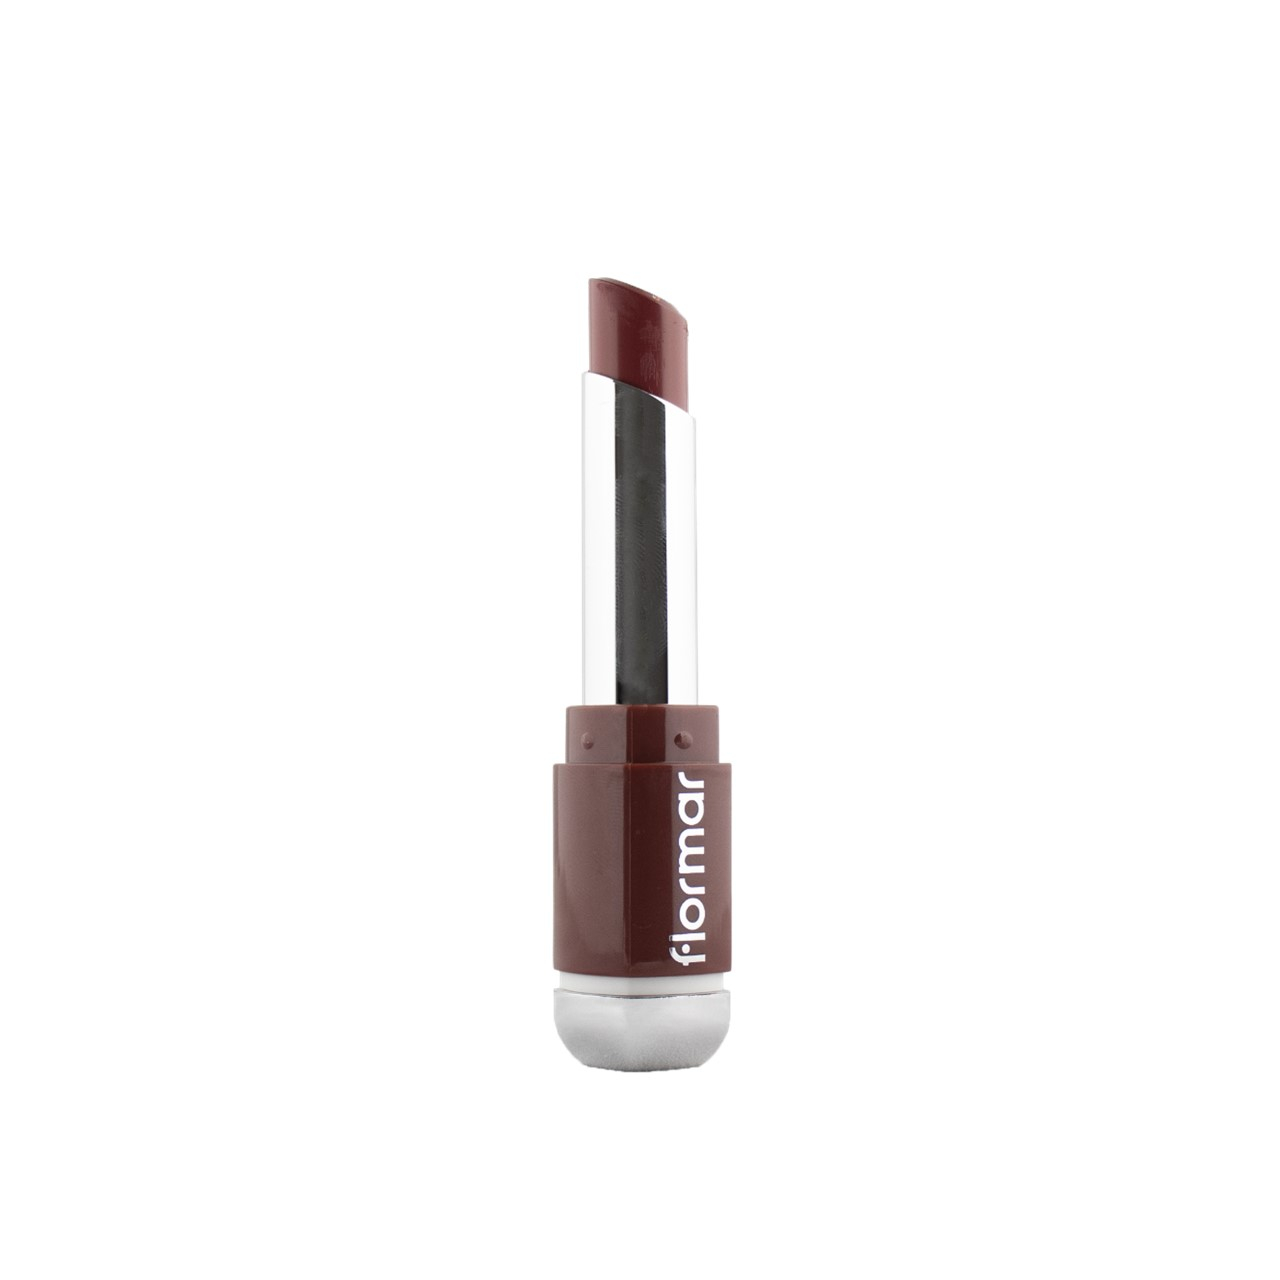 Flormar Prime'n Lips Lipstick 19 Scarlet Sienna 3g (0.11oz)